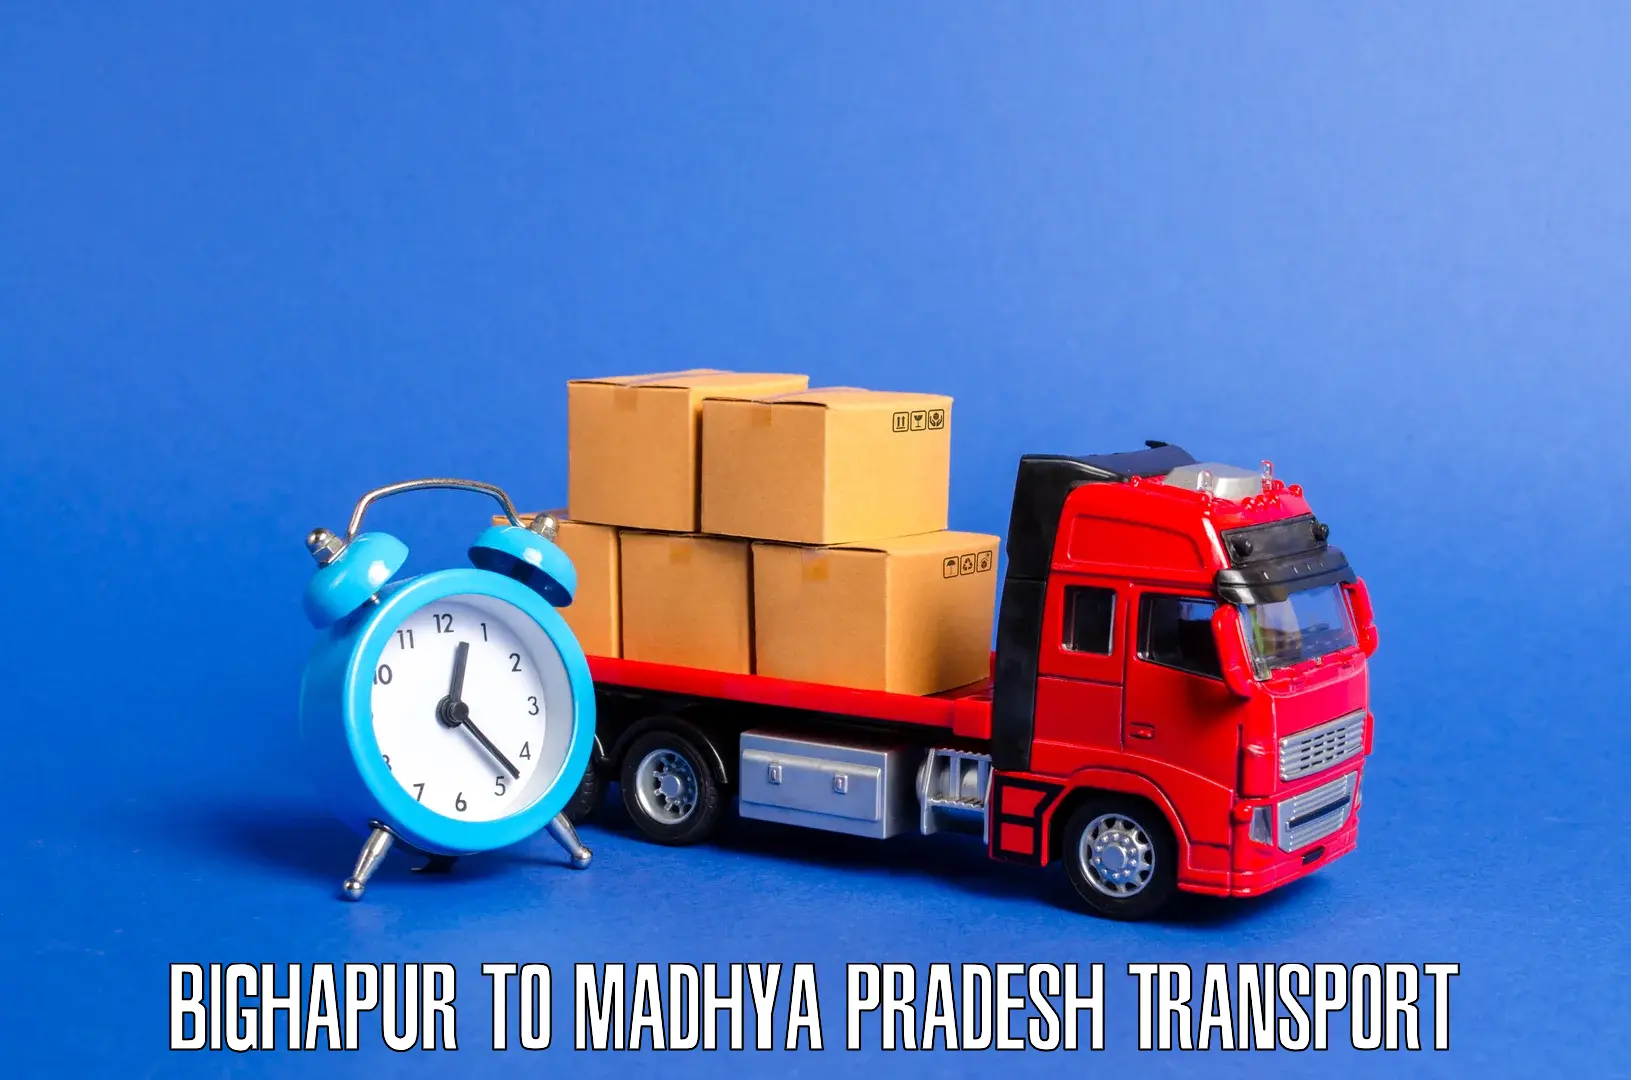 Lorry transport service Bighapur to Gadarwara